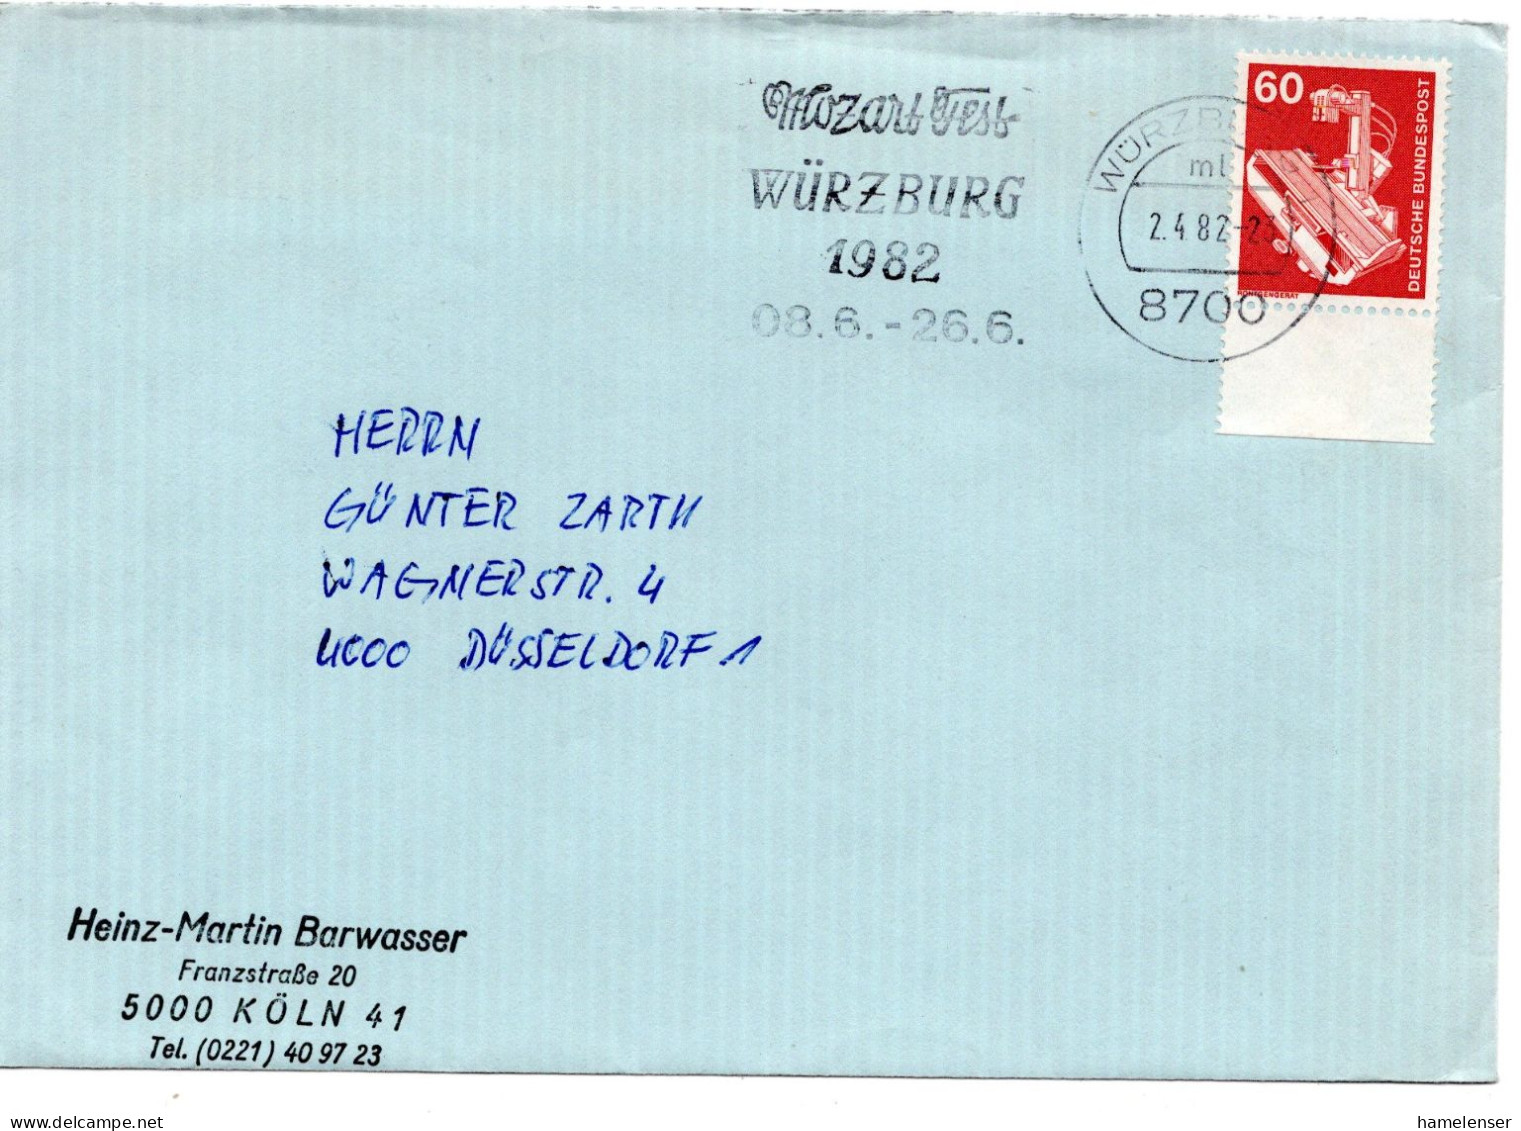 63007 - Bund - 1982 - 60Pfg I&T EF A Bf WUERZBURG - MOZART-FEST ... -> Duesseldorf - Music